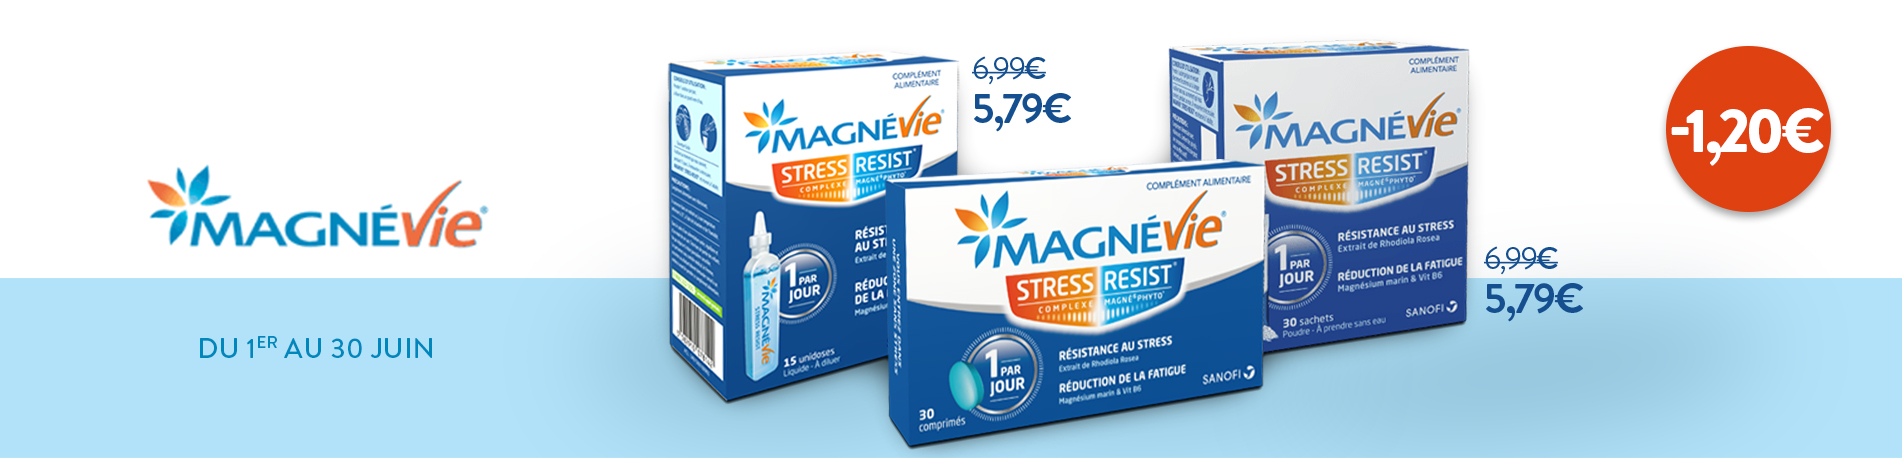 Promotion Magnévie stress resist